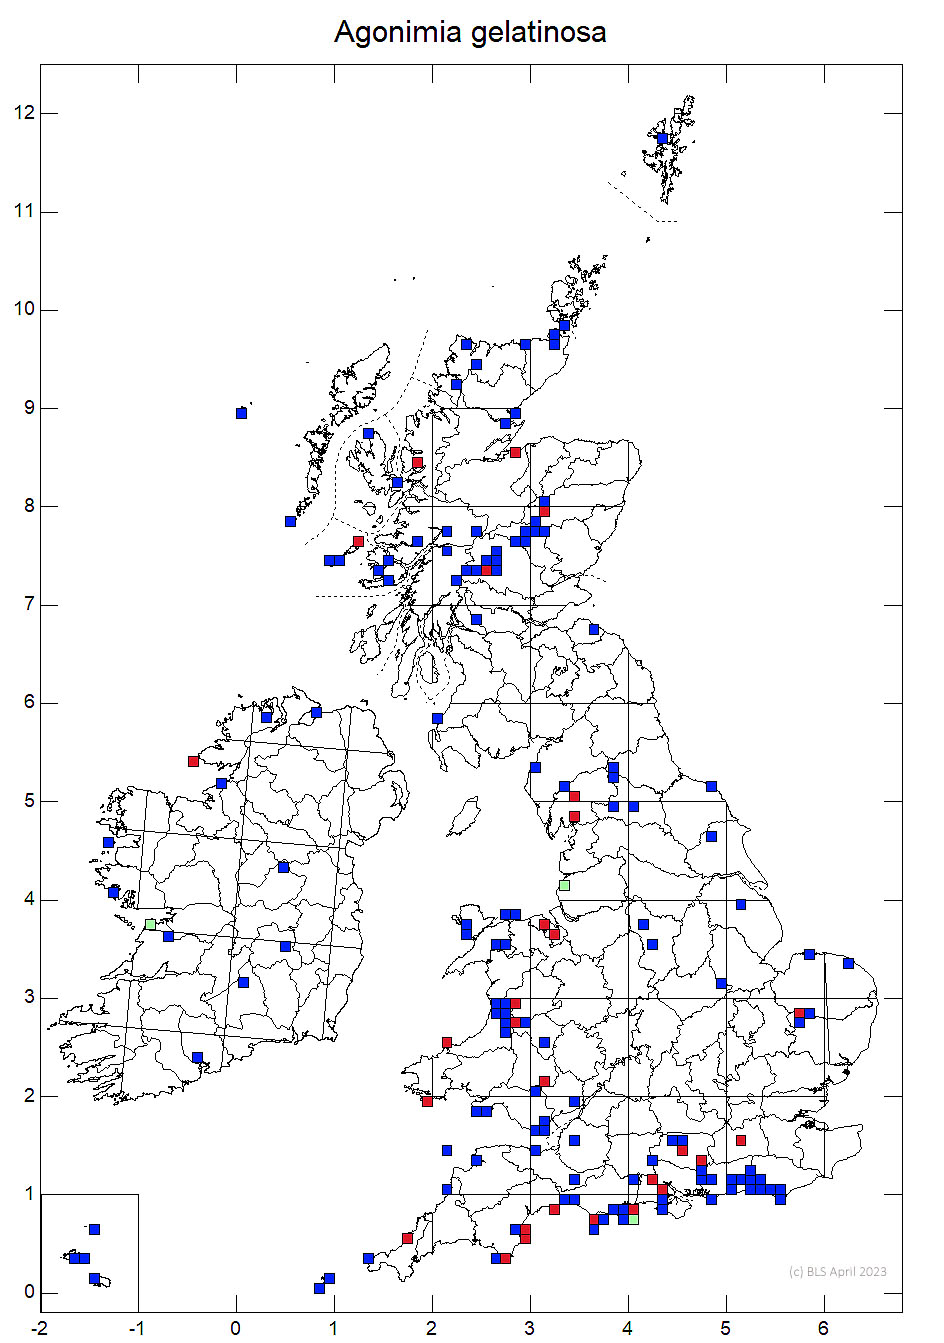 Agonimia gelatinosa 10km sq distribution map